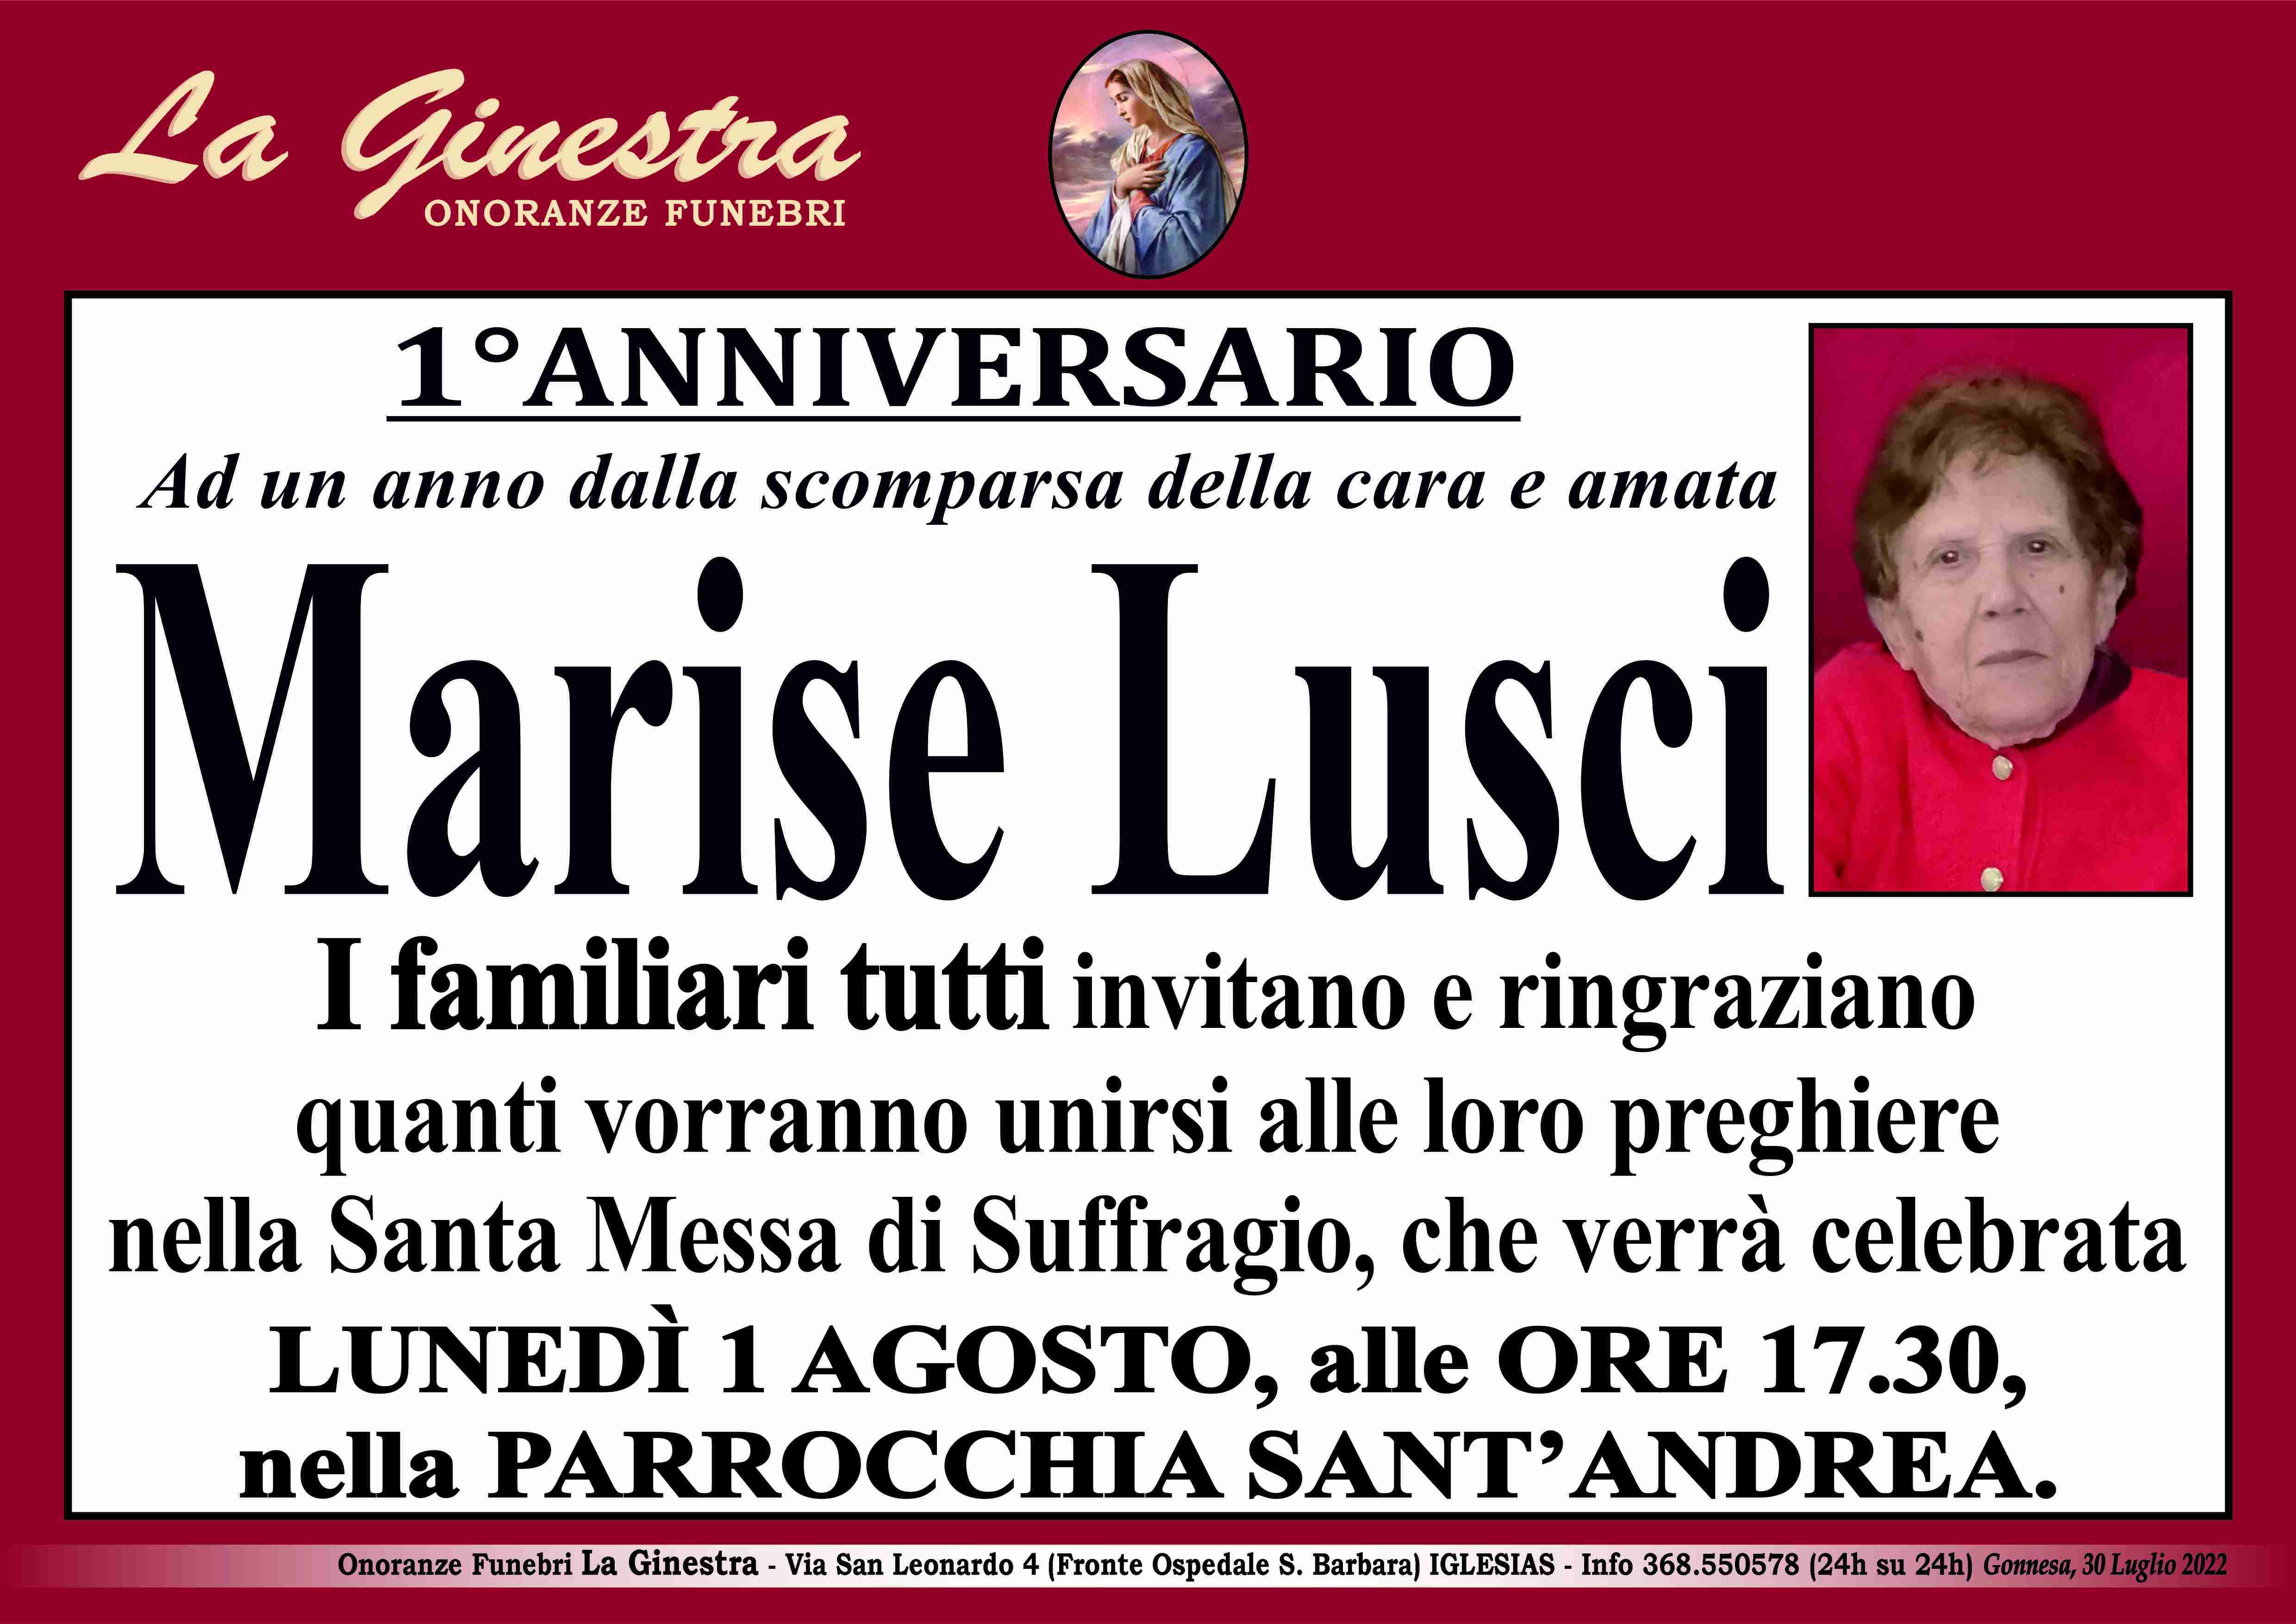 Marise Lusci